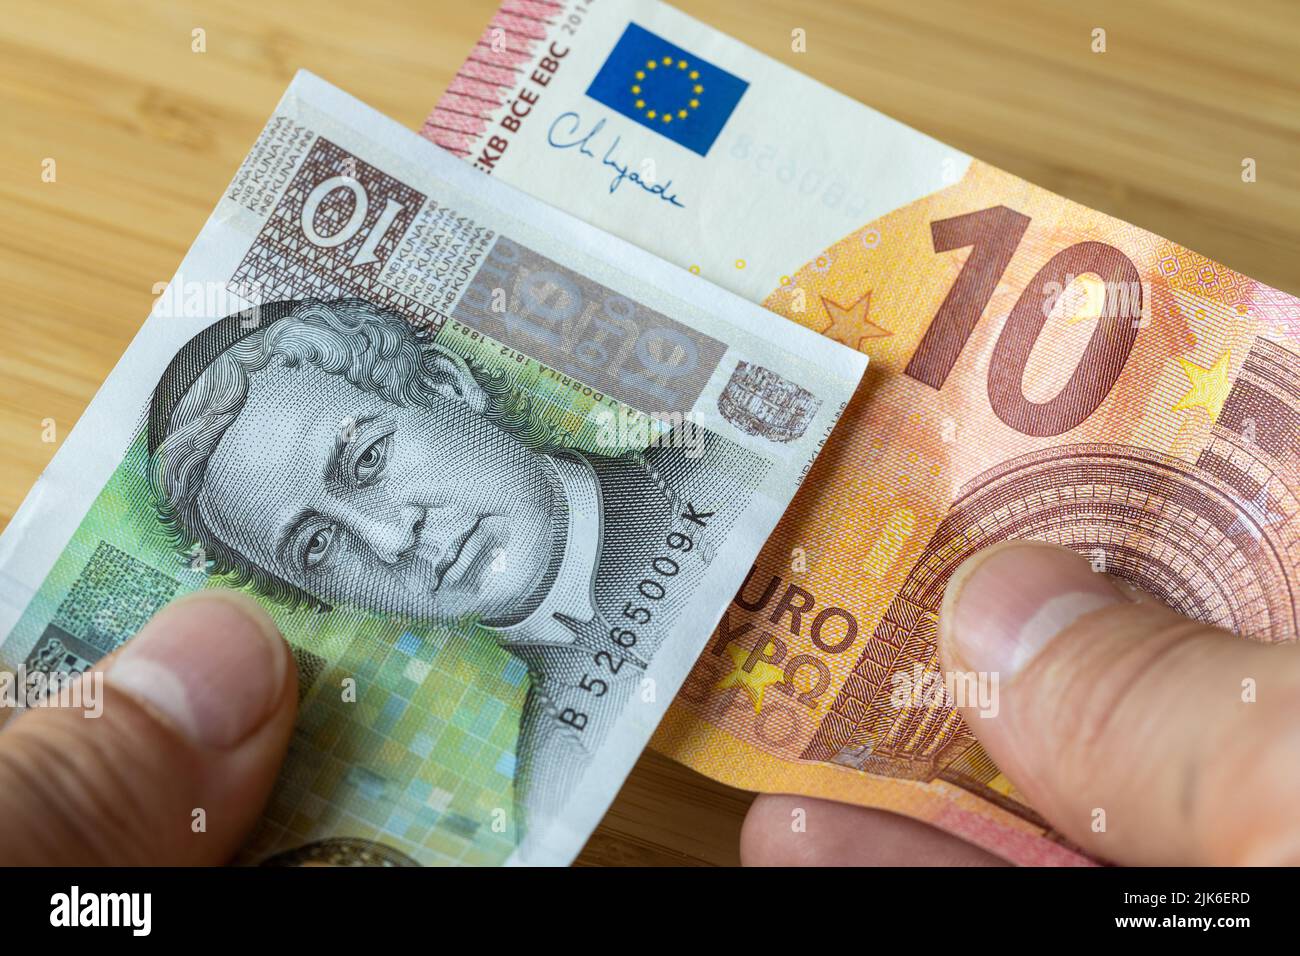 10 euro banknote and 10 kuna in hand, Exchange of Croatian Kuna into euro, Croatia's entry into the Eurozone Stock Photo